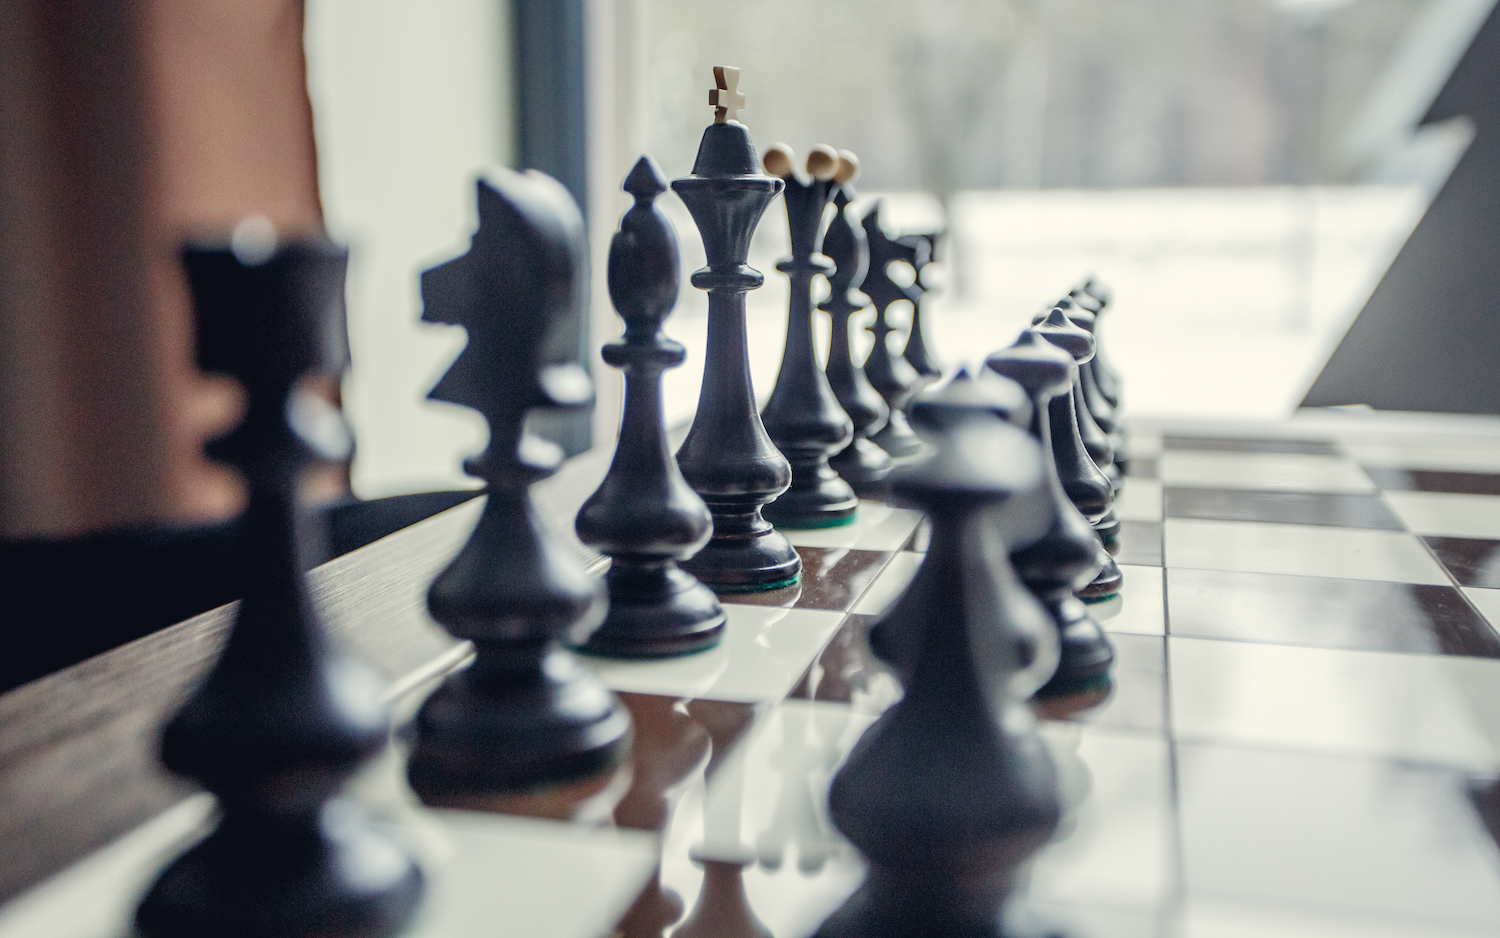 Chess-federation-chooses-algorand-blockchain-to-host-player-rankings